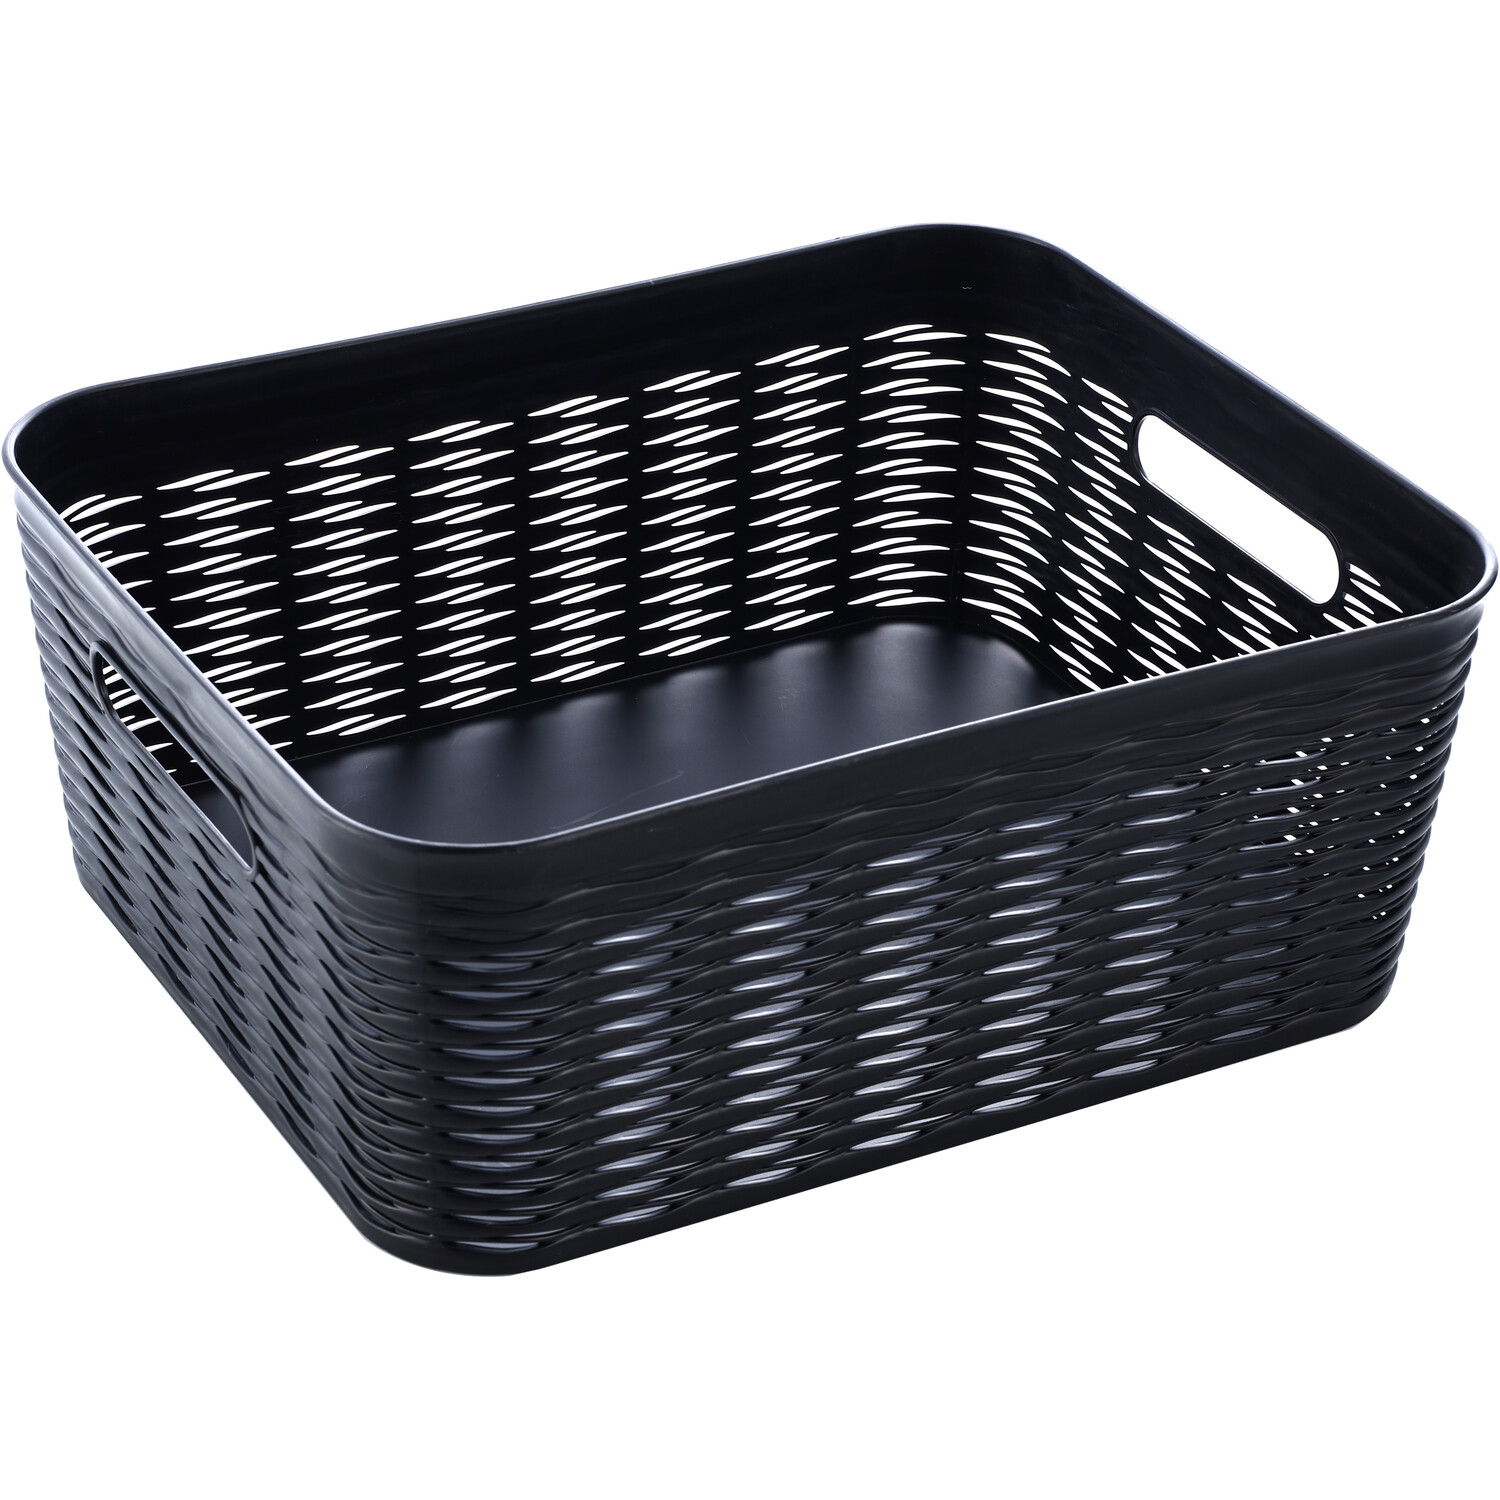 11L Black Wave Laundry Basket Image 1